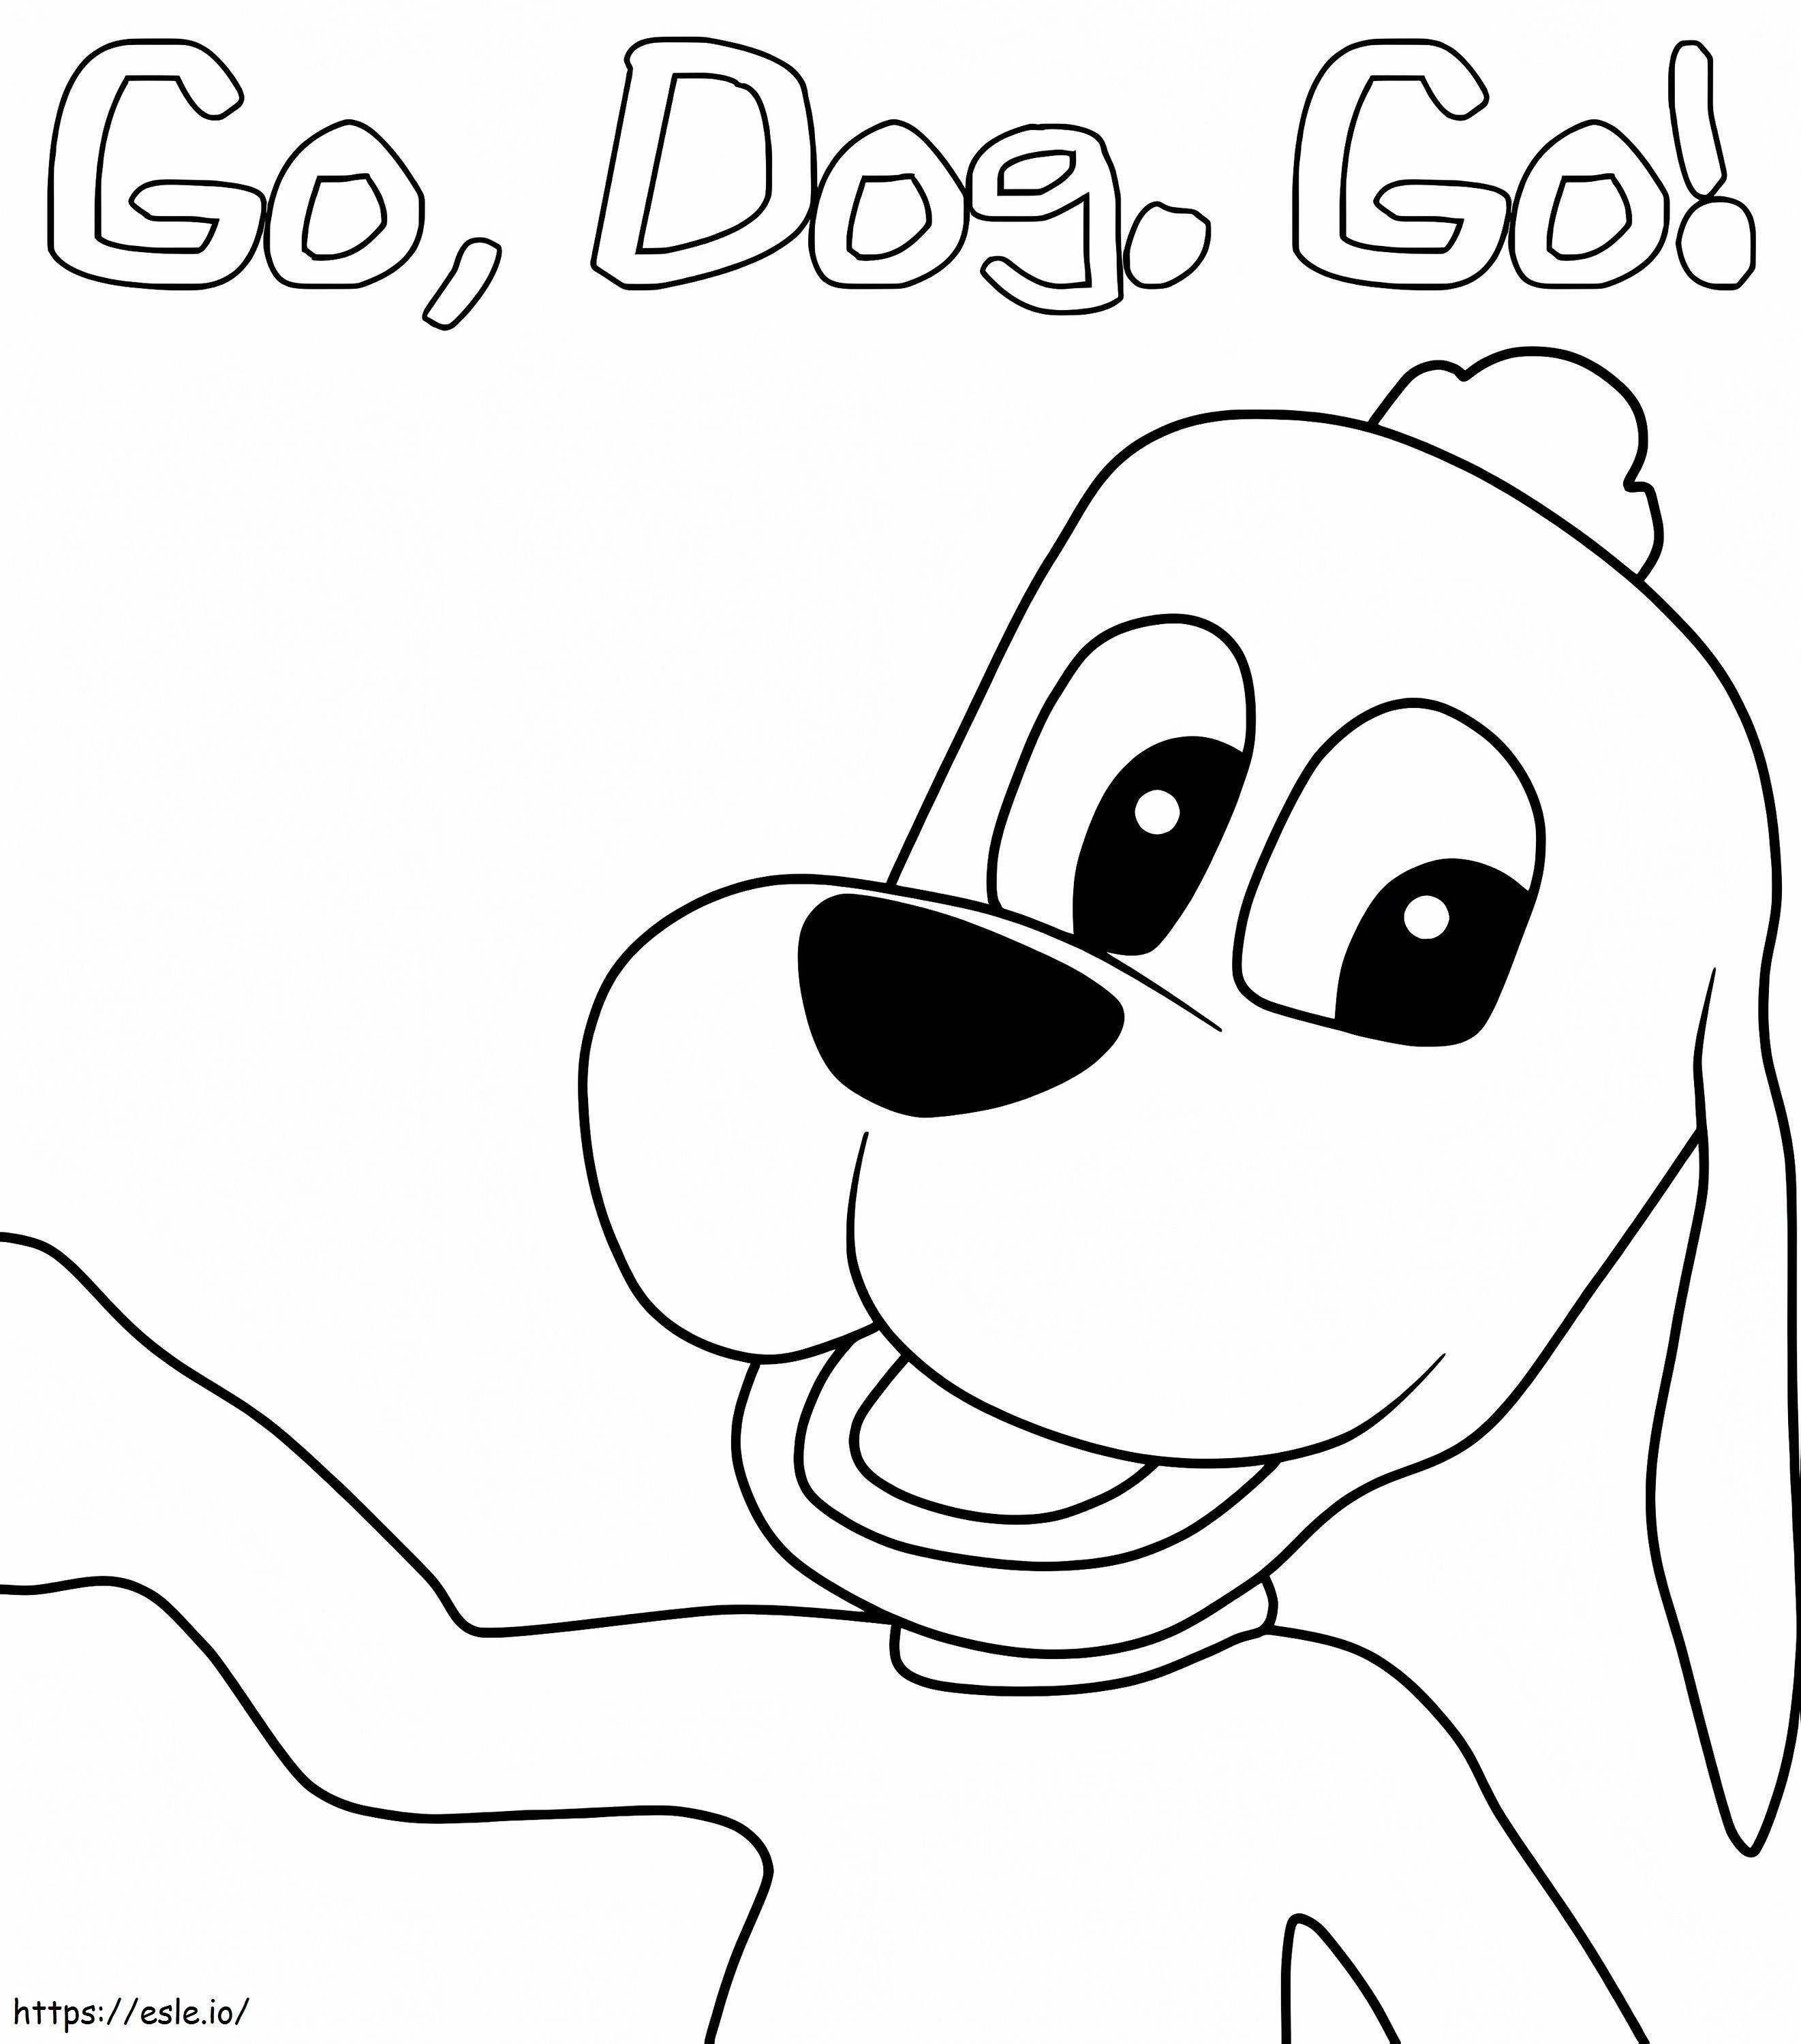 Tag Barker a Go Dog Go-ból kifestő